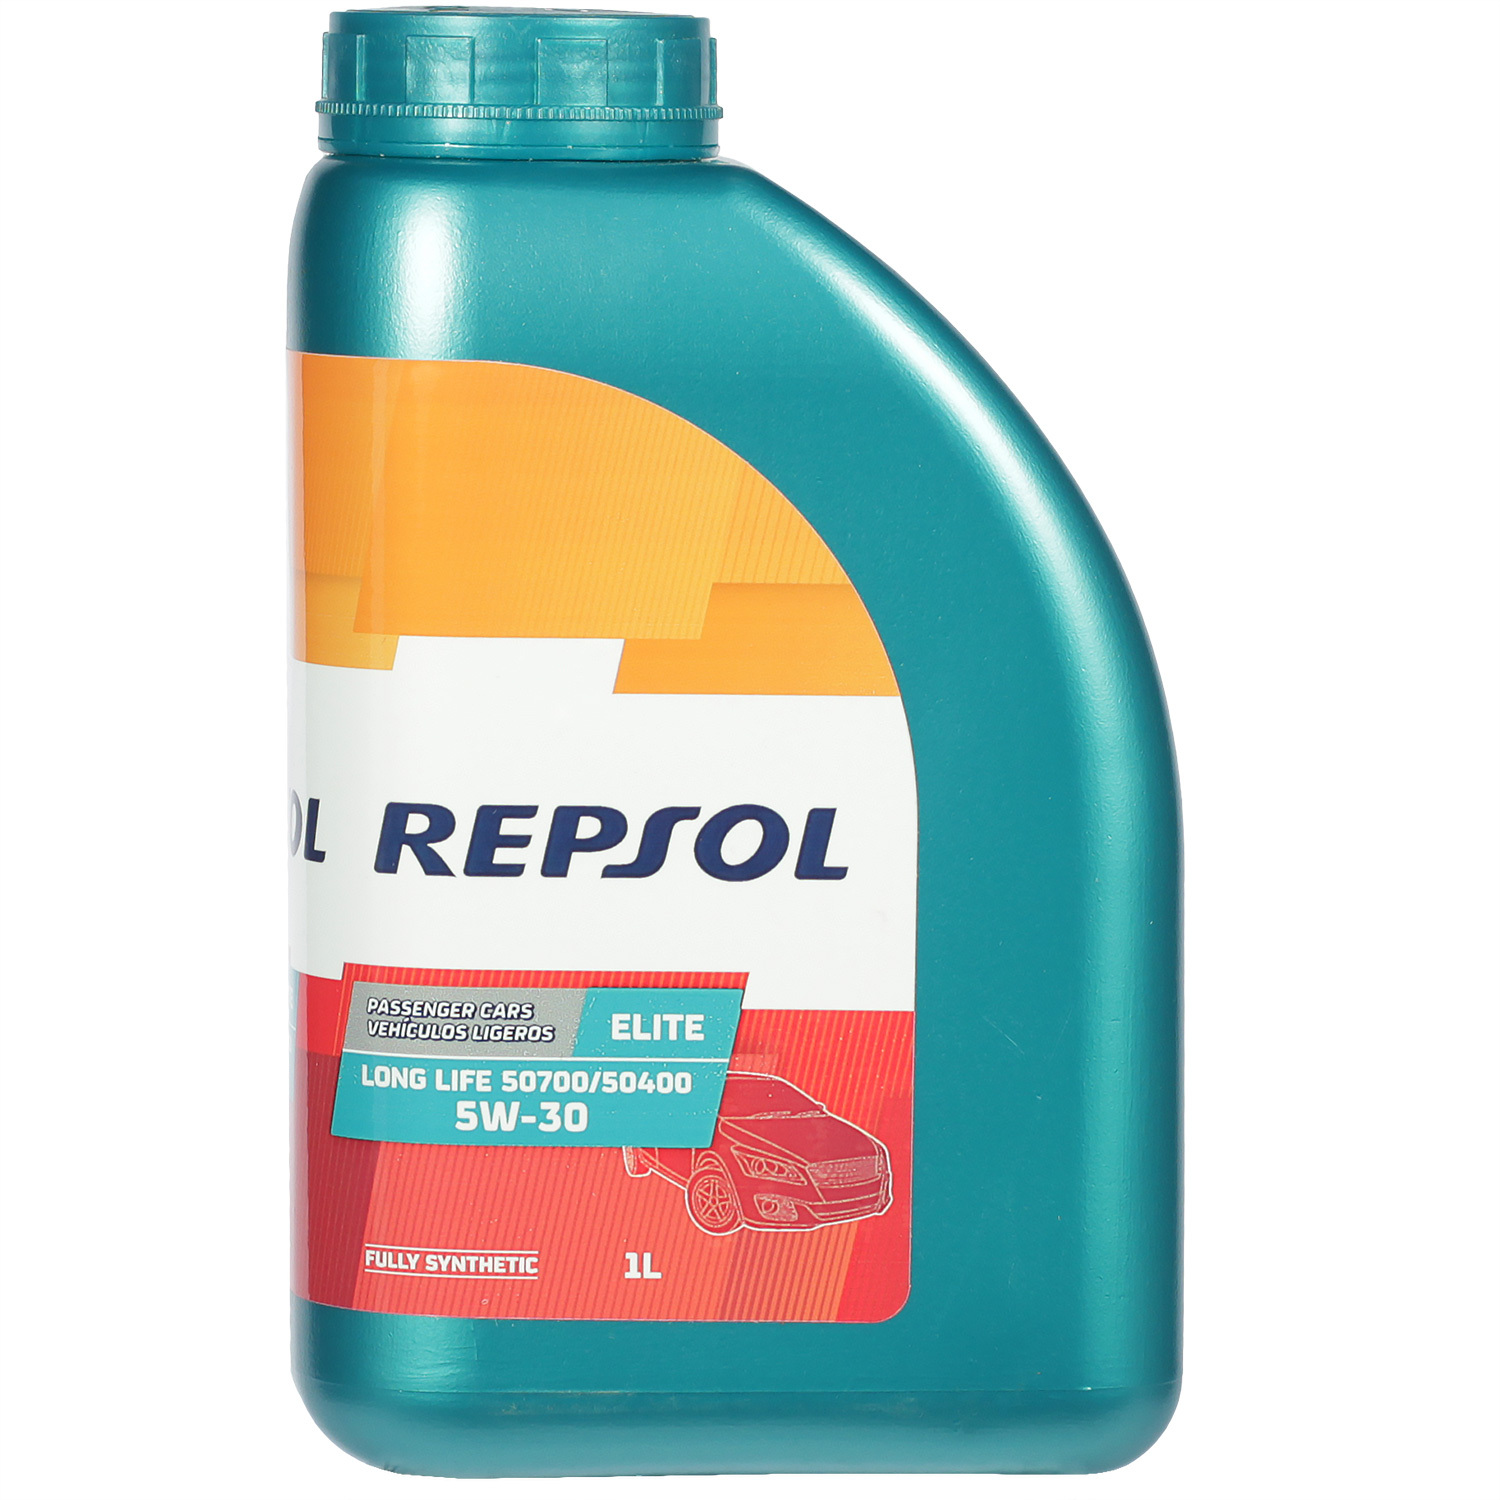 Repsol Моторное масло Repsol Elite LONG LIFE 50700/50400 5W-30, 1 л